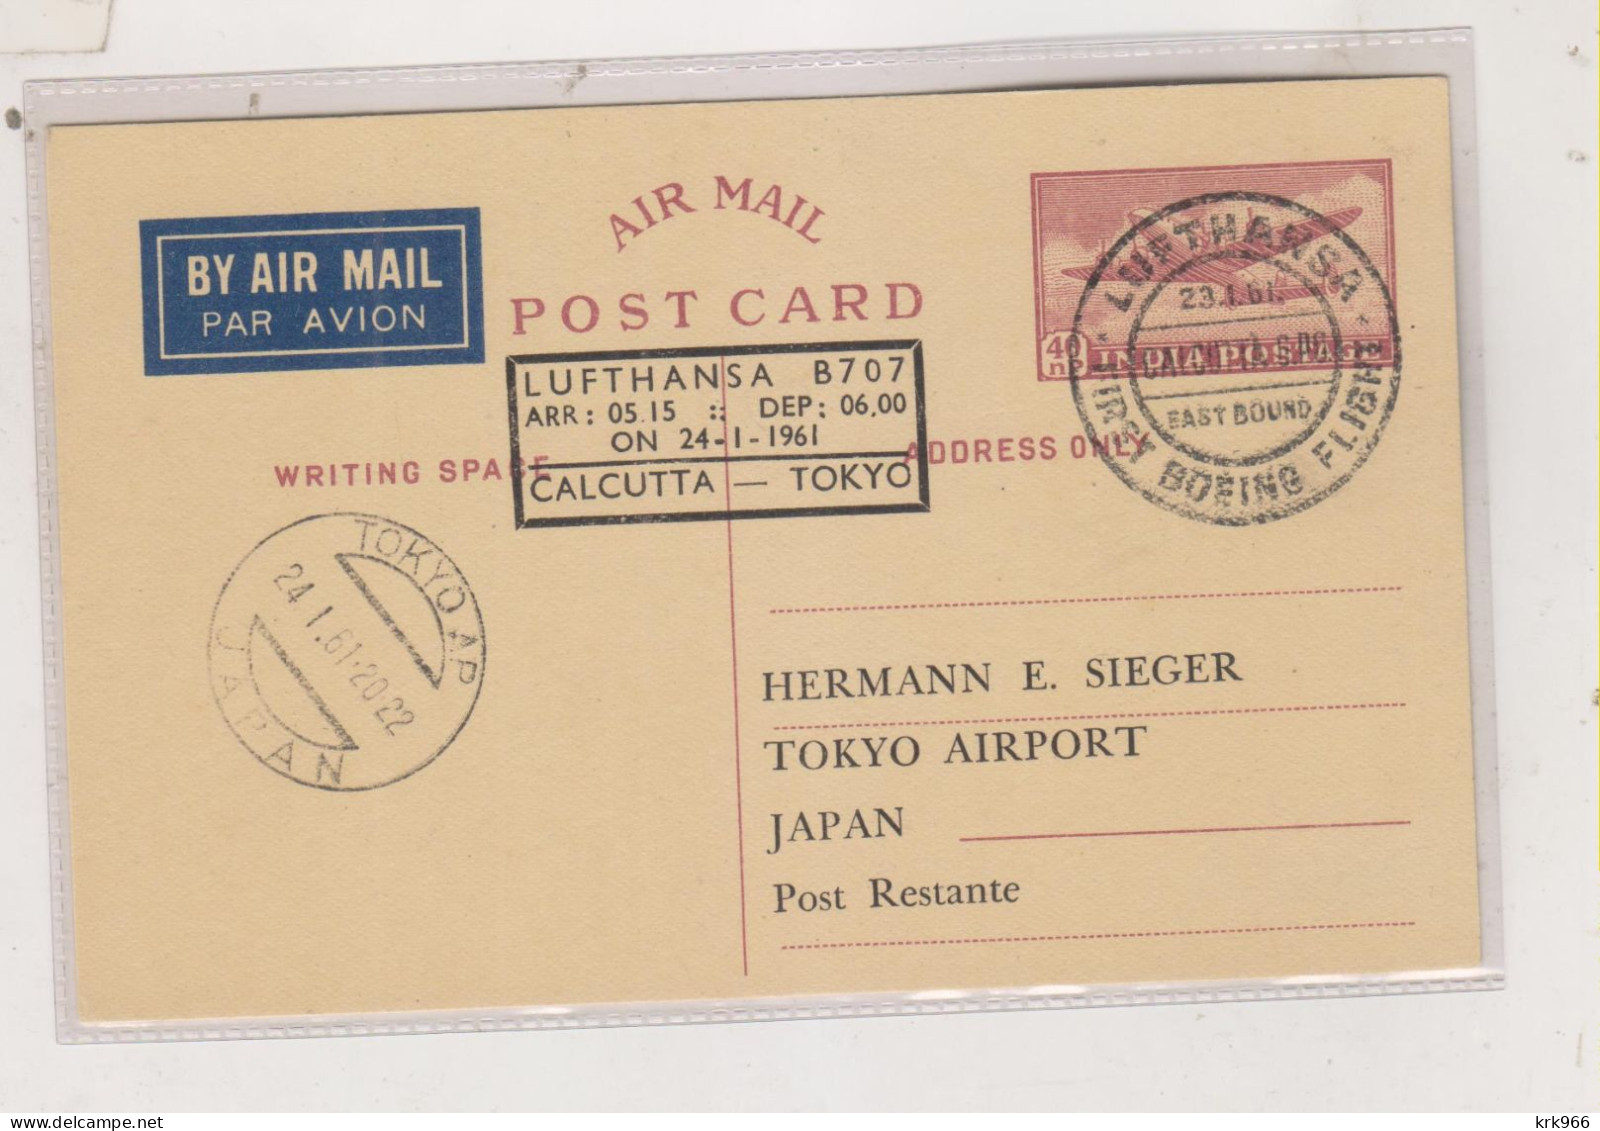 INDIA, 1961 CALCUTTA Airmail Postal Stationery To Japan First Flight Calcutta - Tokyo - Posta Aerea